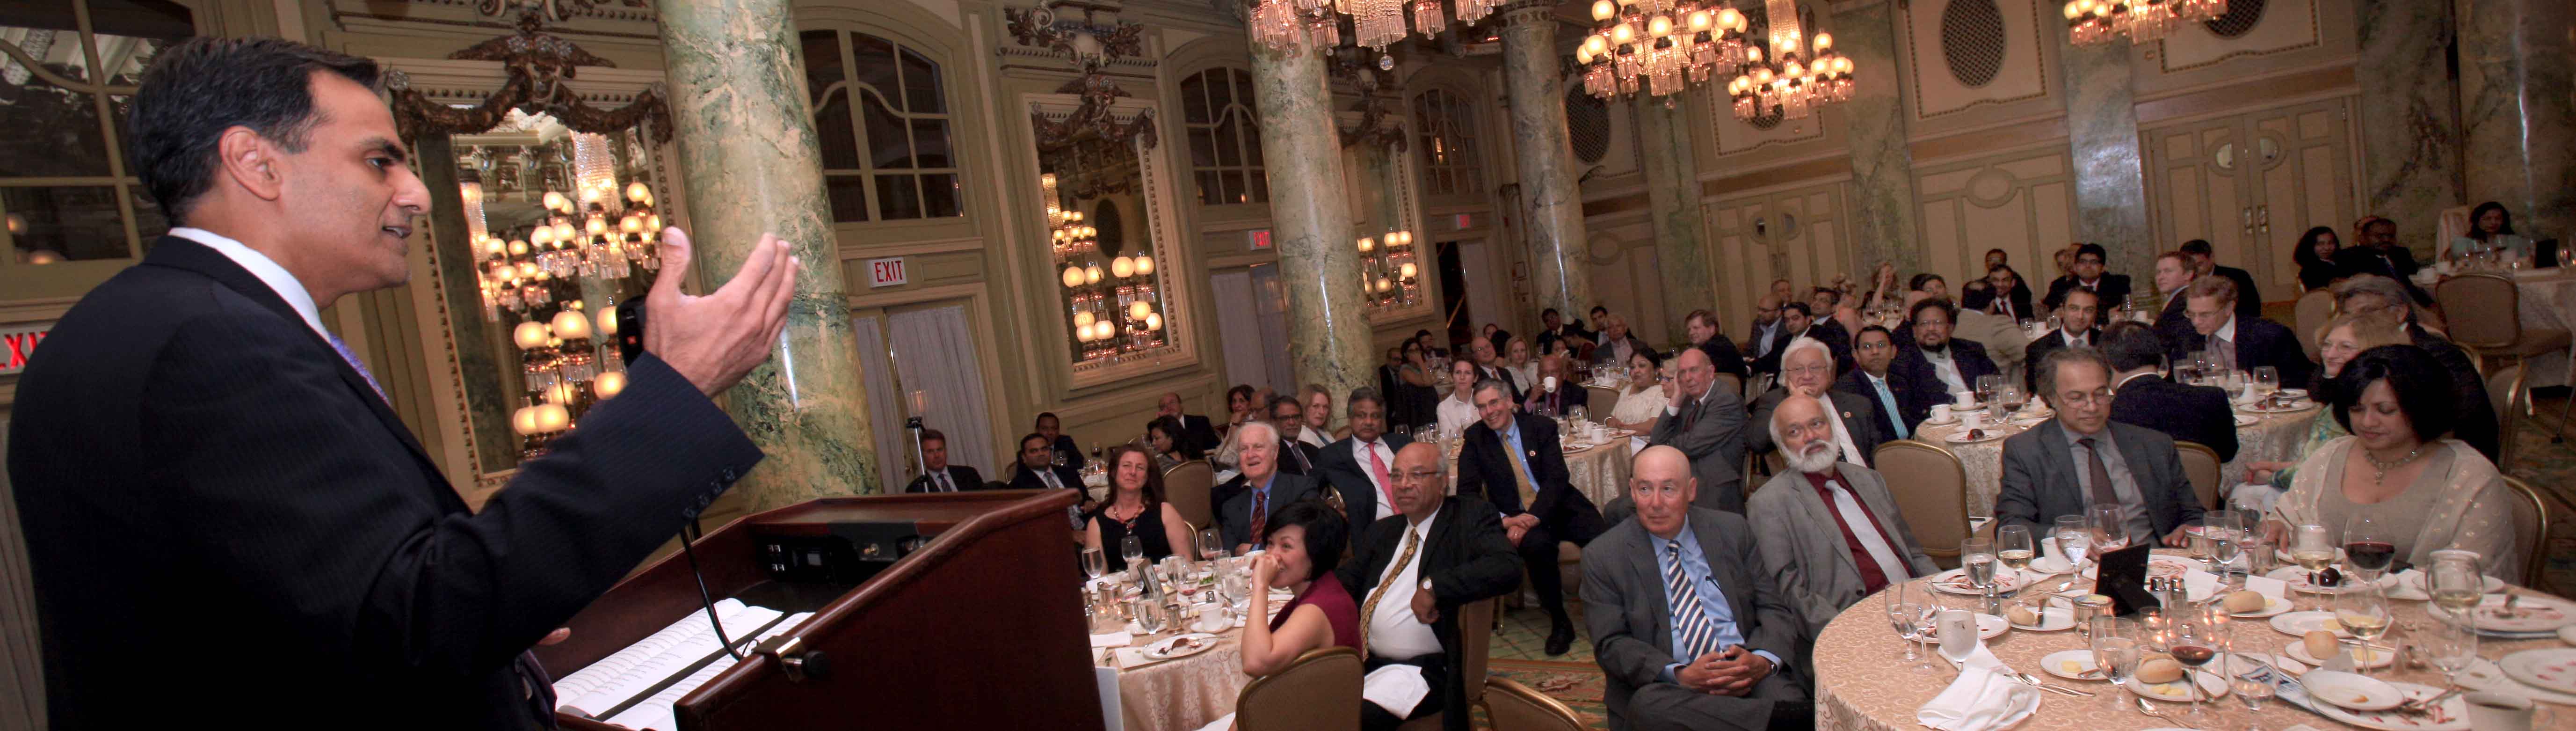 Senator Bob Casey Honored, Richard Verma speaks at South Asia Journal Inaugural Dinner